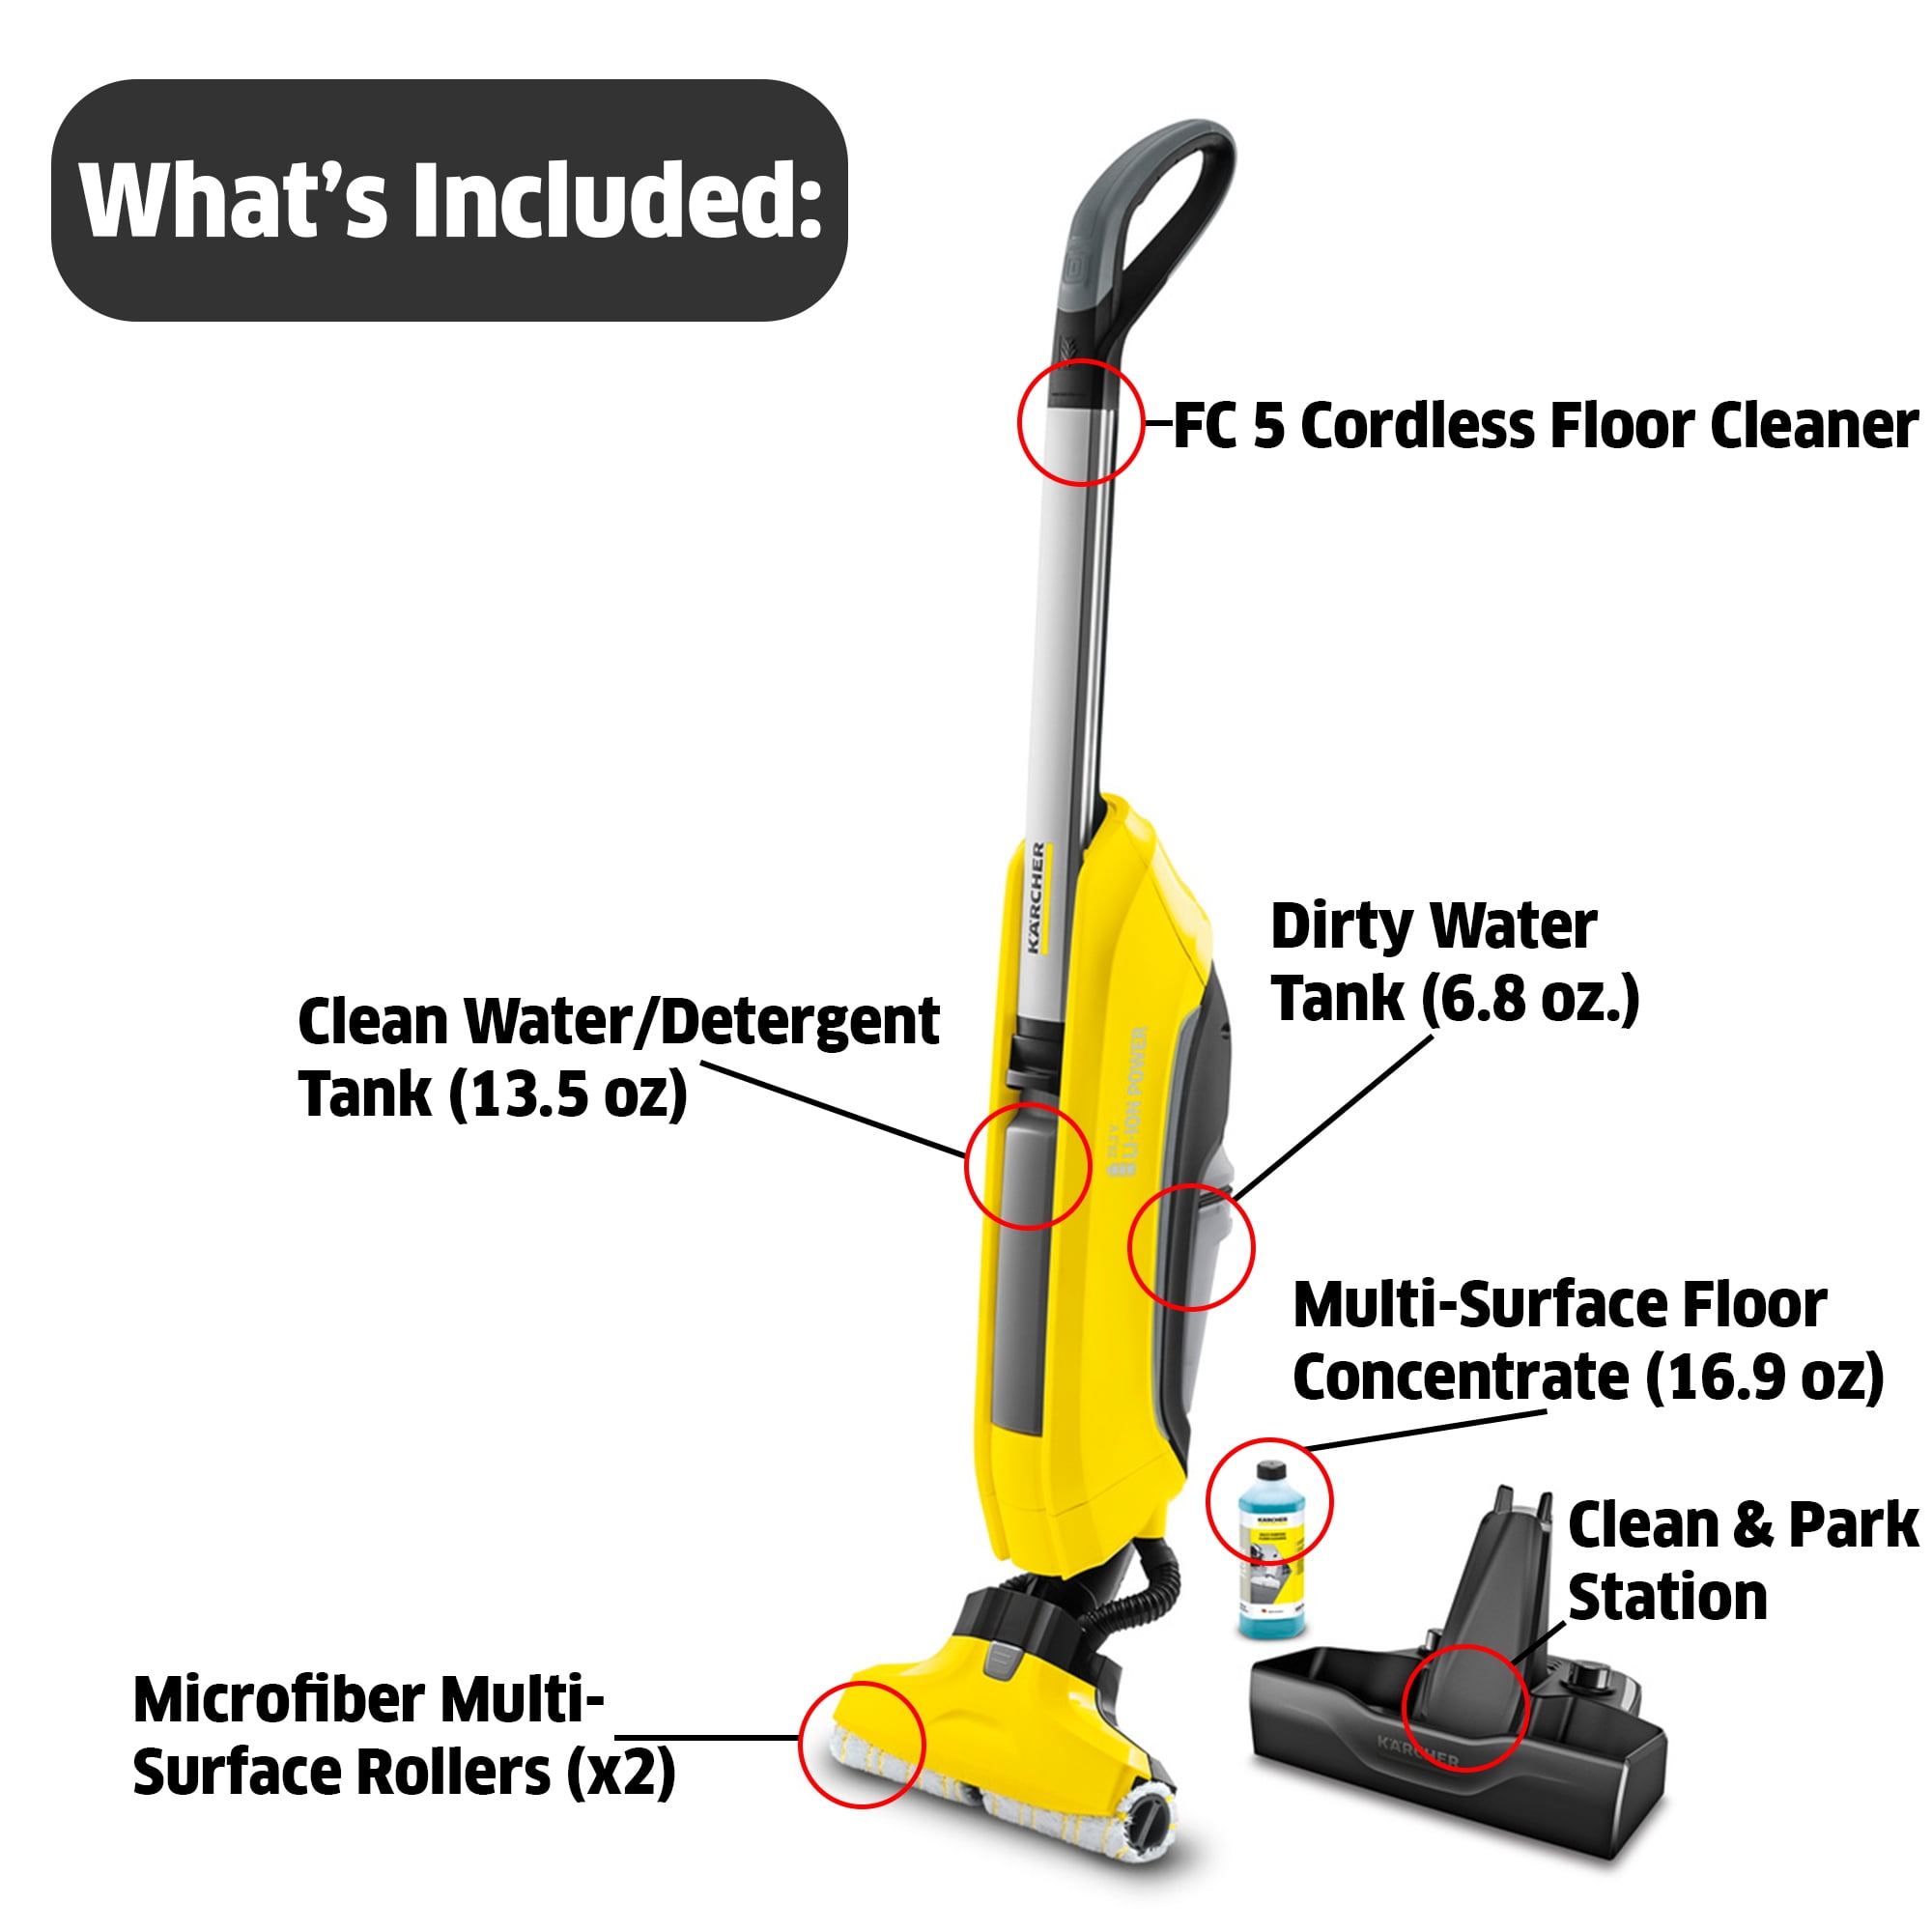  KARCHER FC5 Hard Floor Cleaner - Yellow : Everything Else